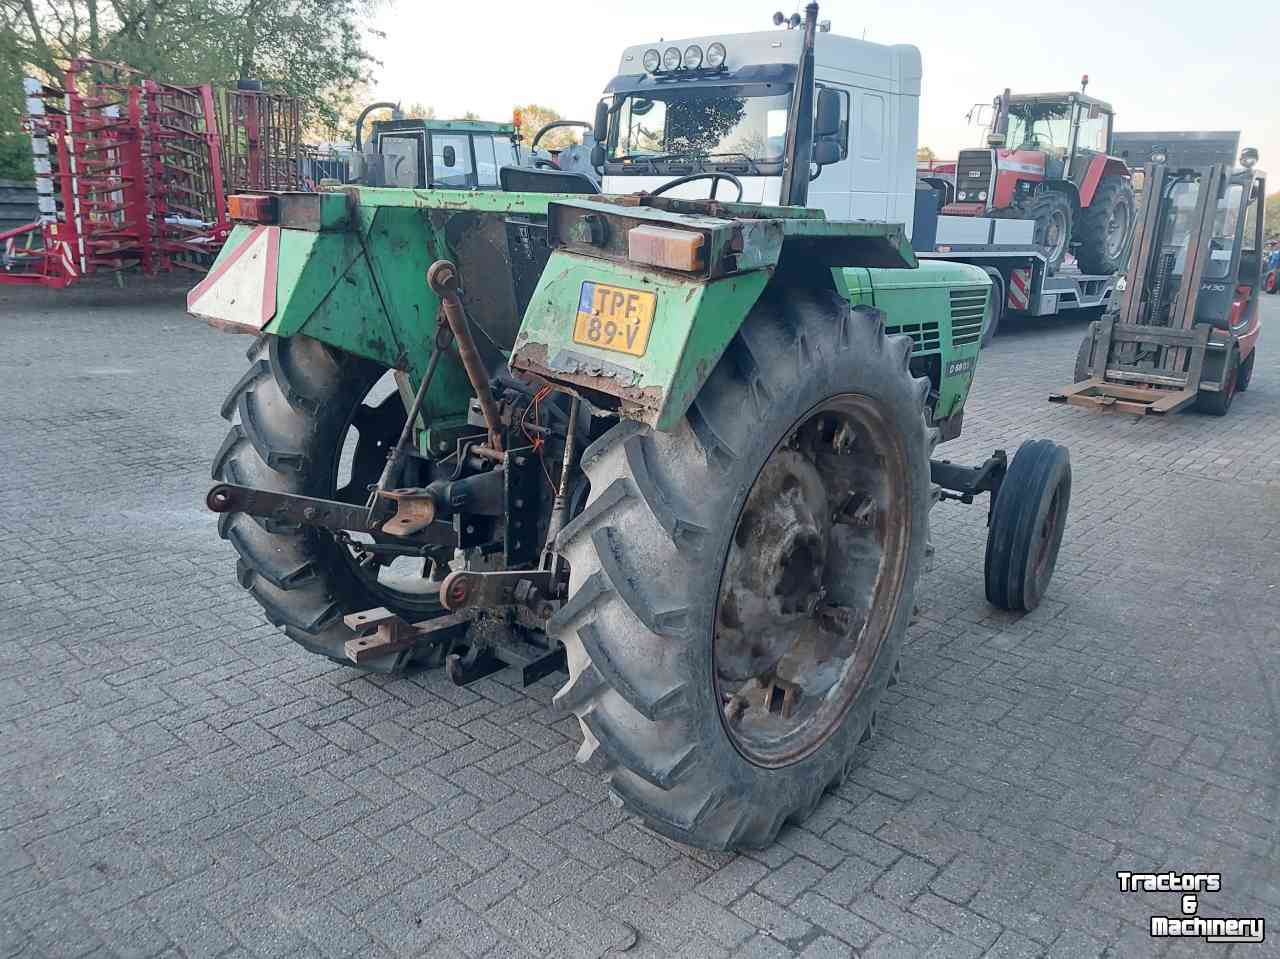 Tractors Deutz-Fahr 6806